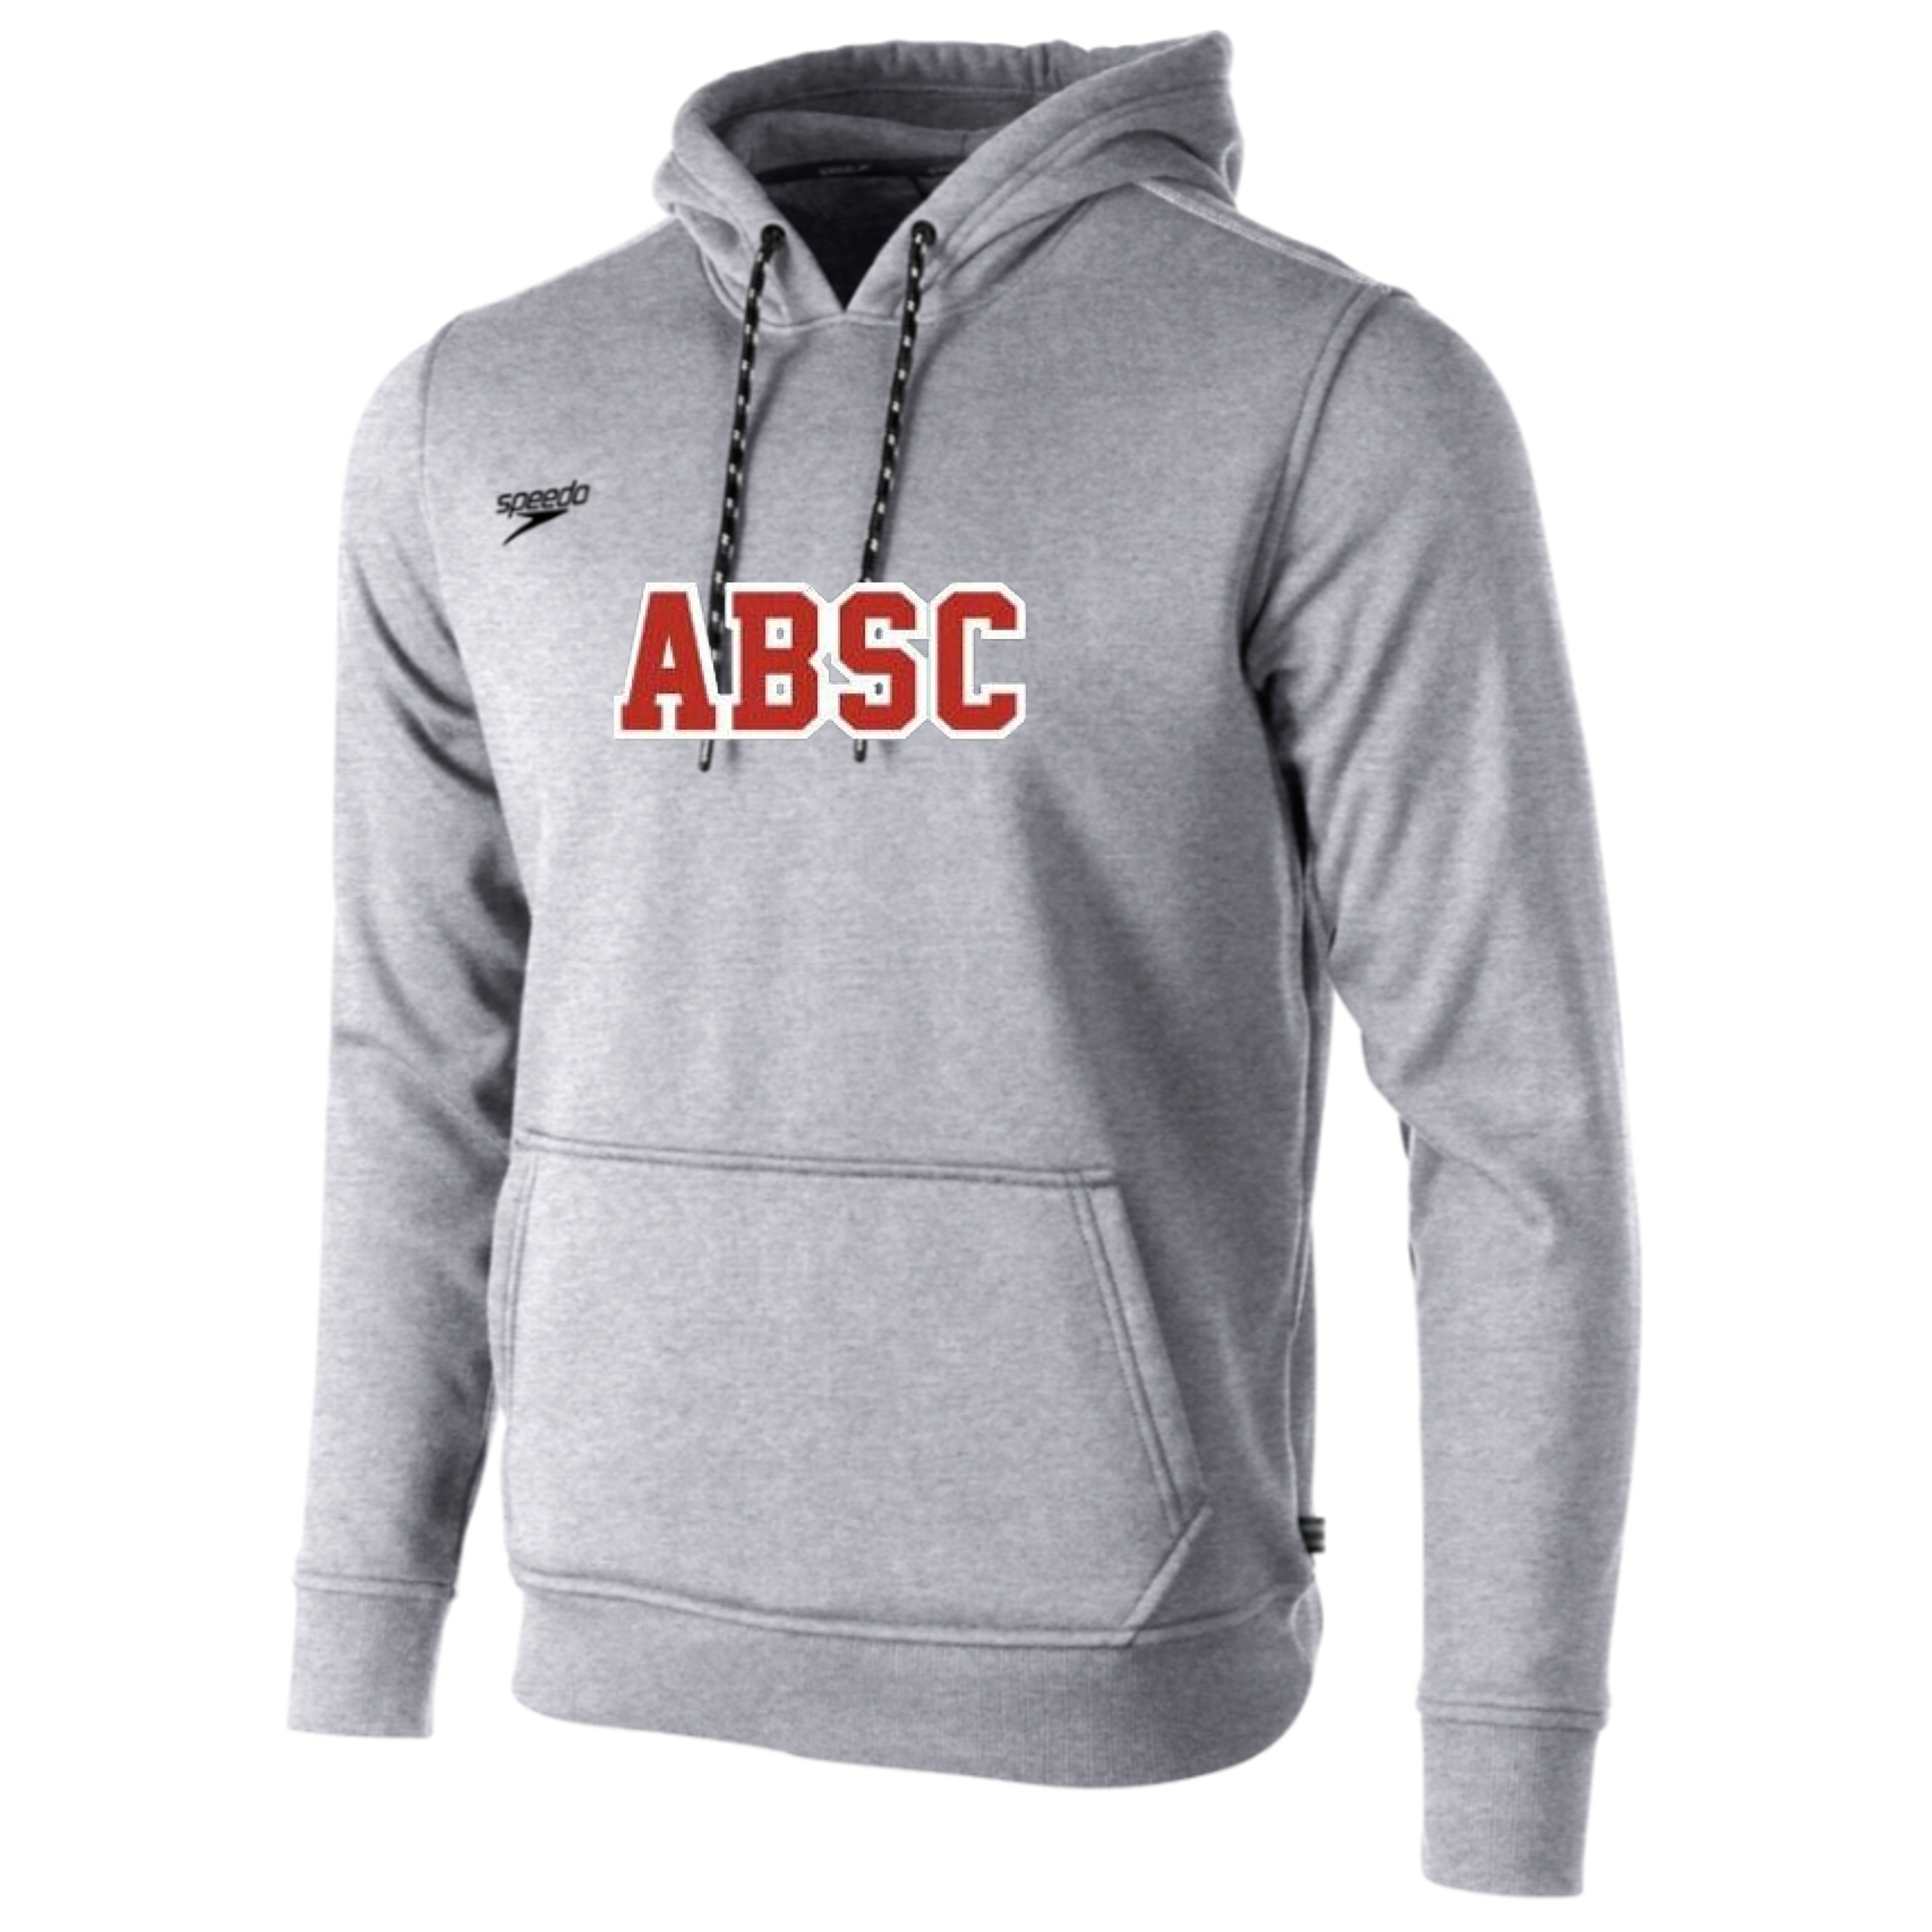 Speedo Unisex Hooded Sweatshirt (Customized) - ABSC